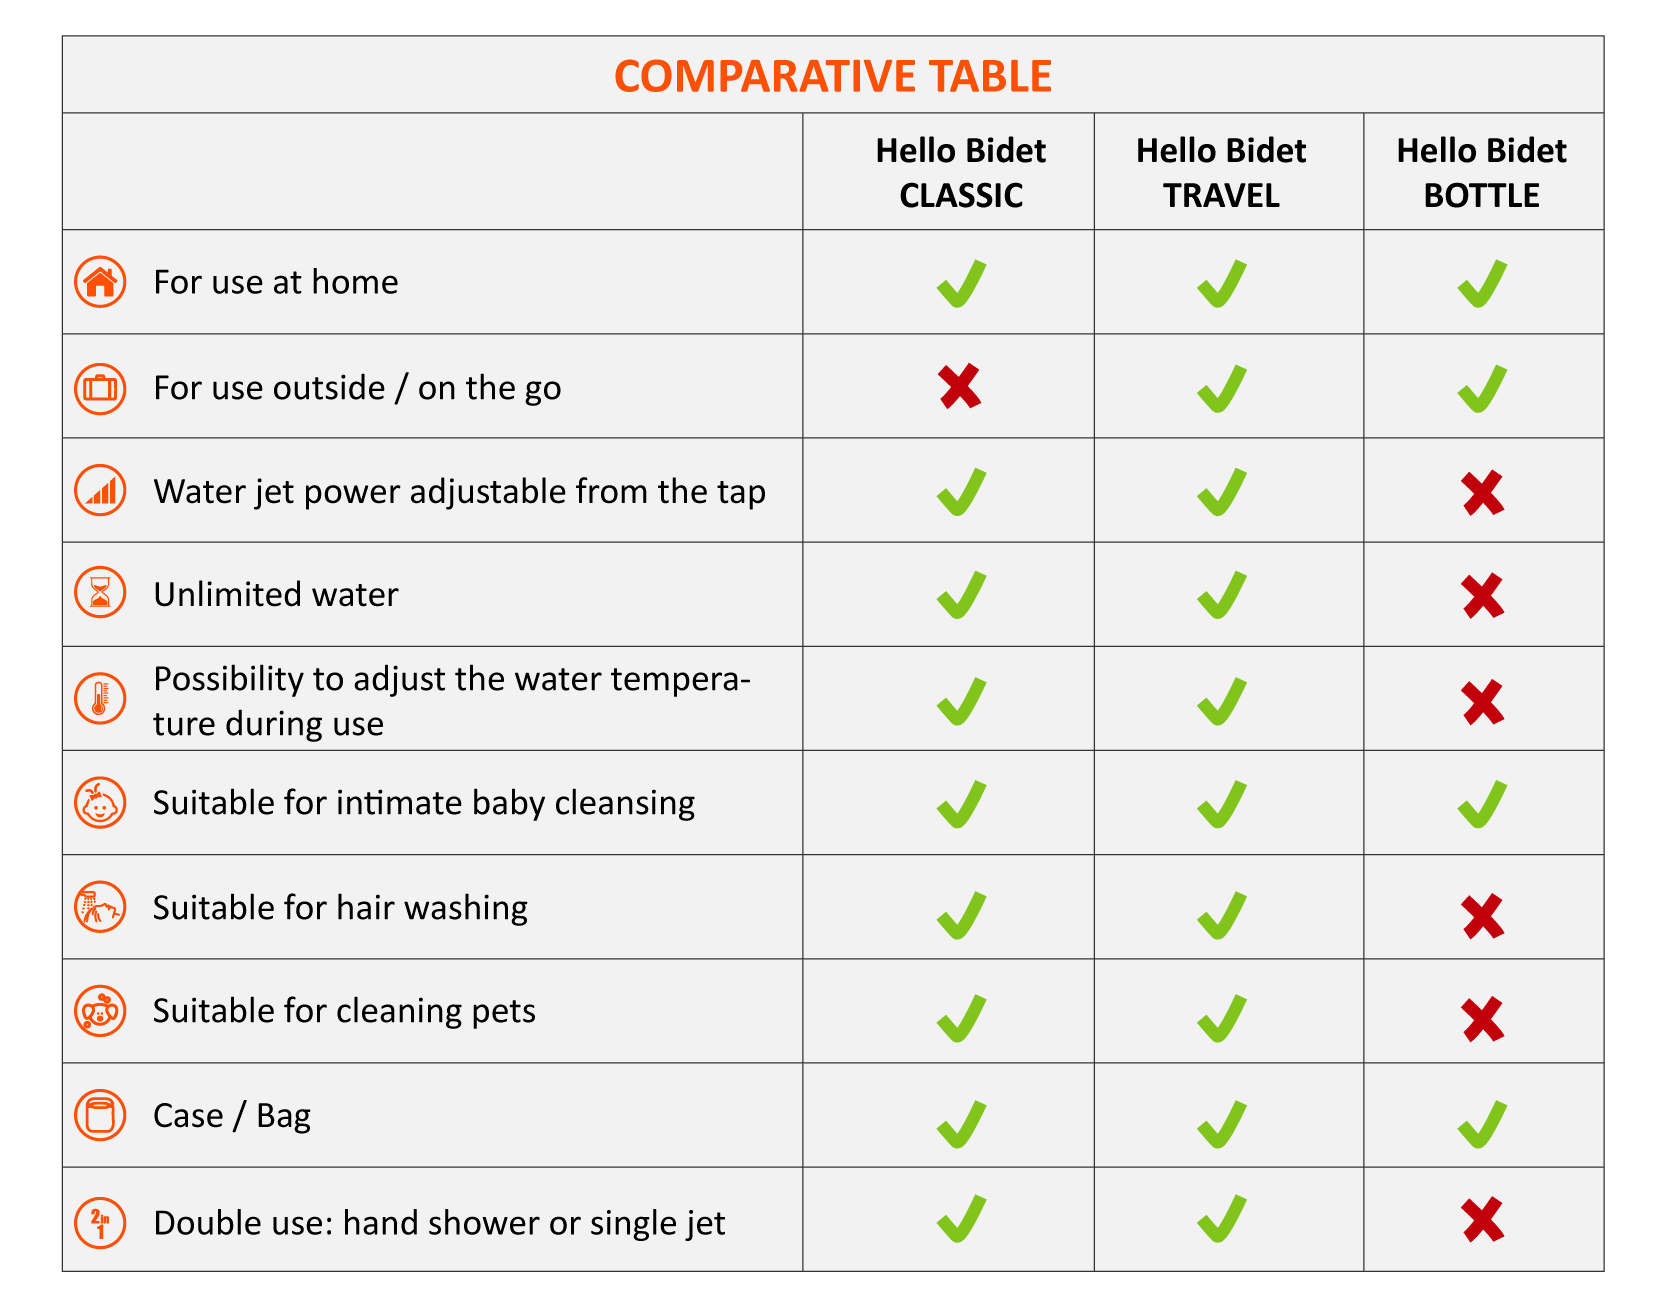 Comparative table Hello Bidet Bottle